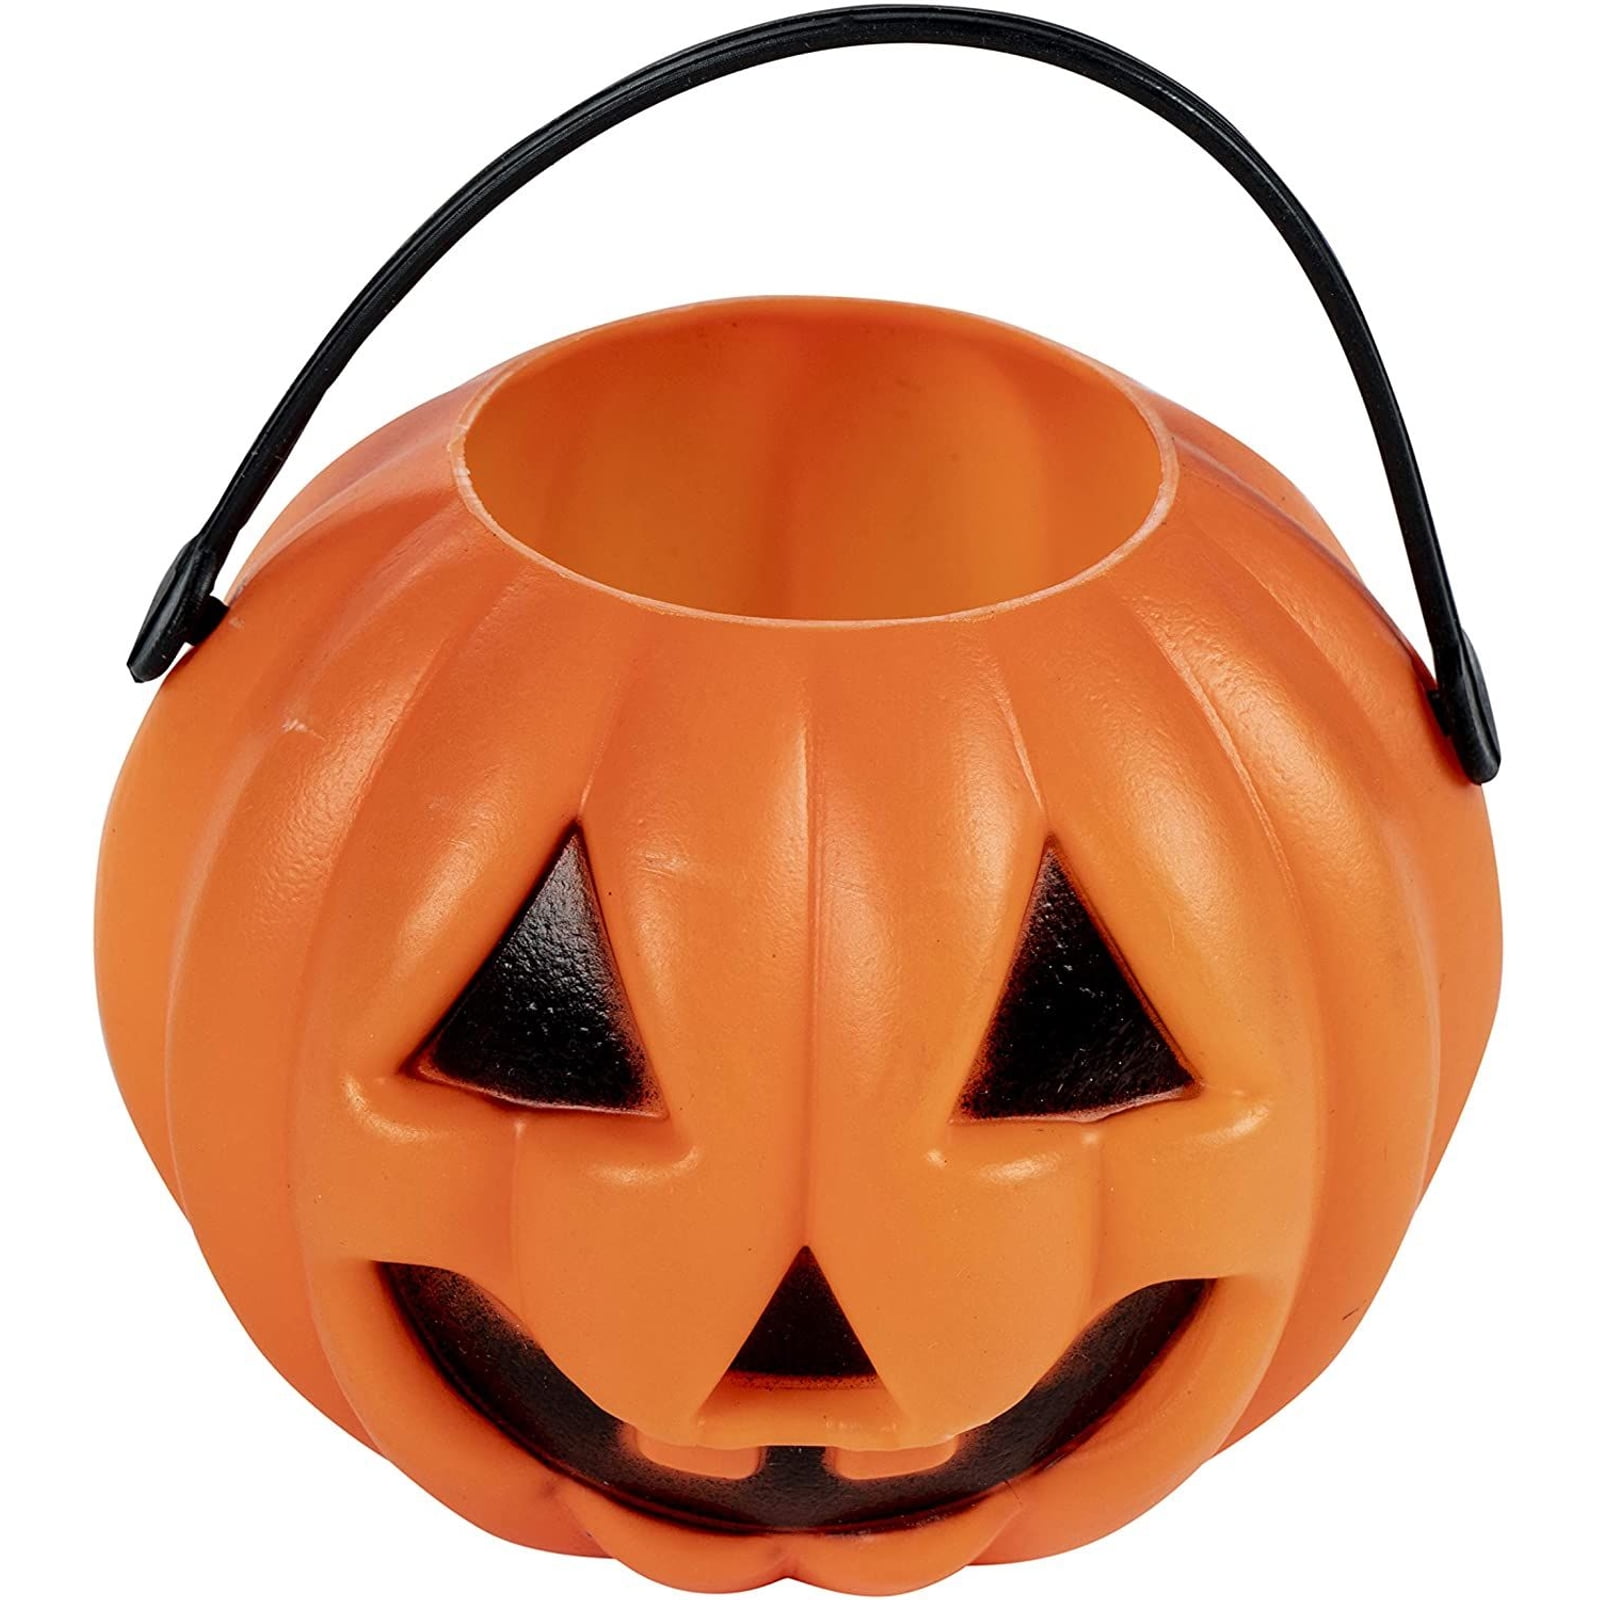 Yvetti Halloween Pumpkin Candy Holder Mini Trick-or-treat Halloween Candy Jar Bucket Basket Pail S 